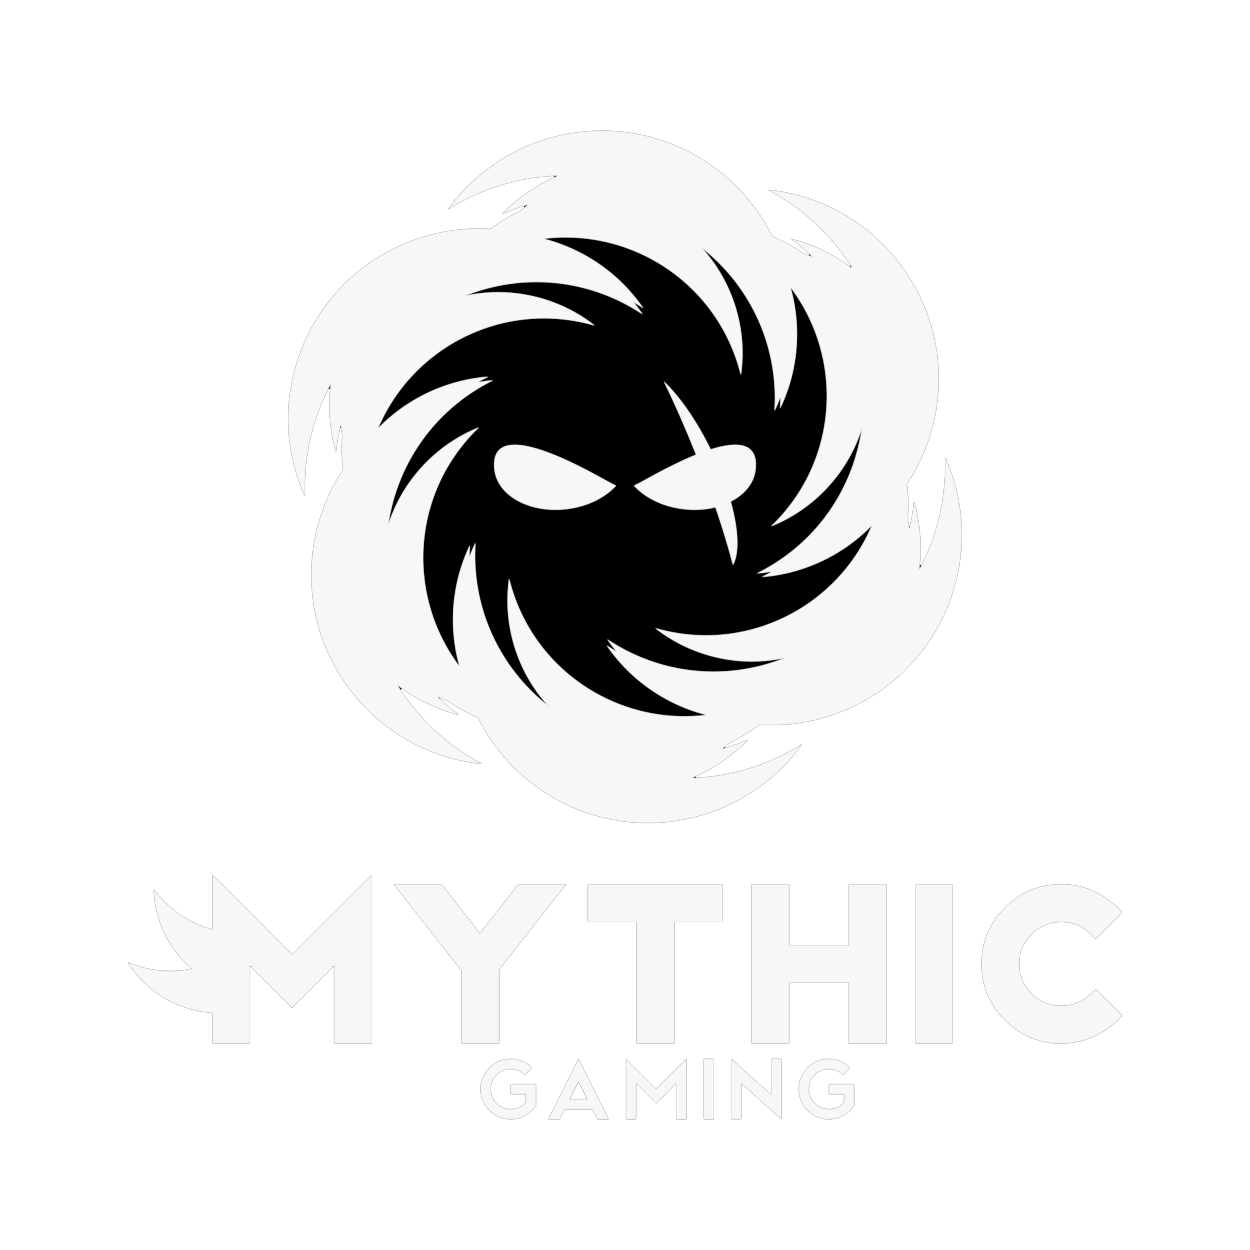 Mythic Gaming